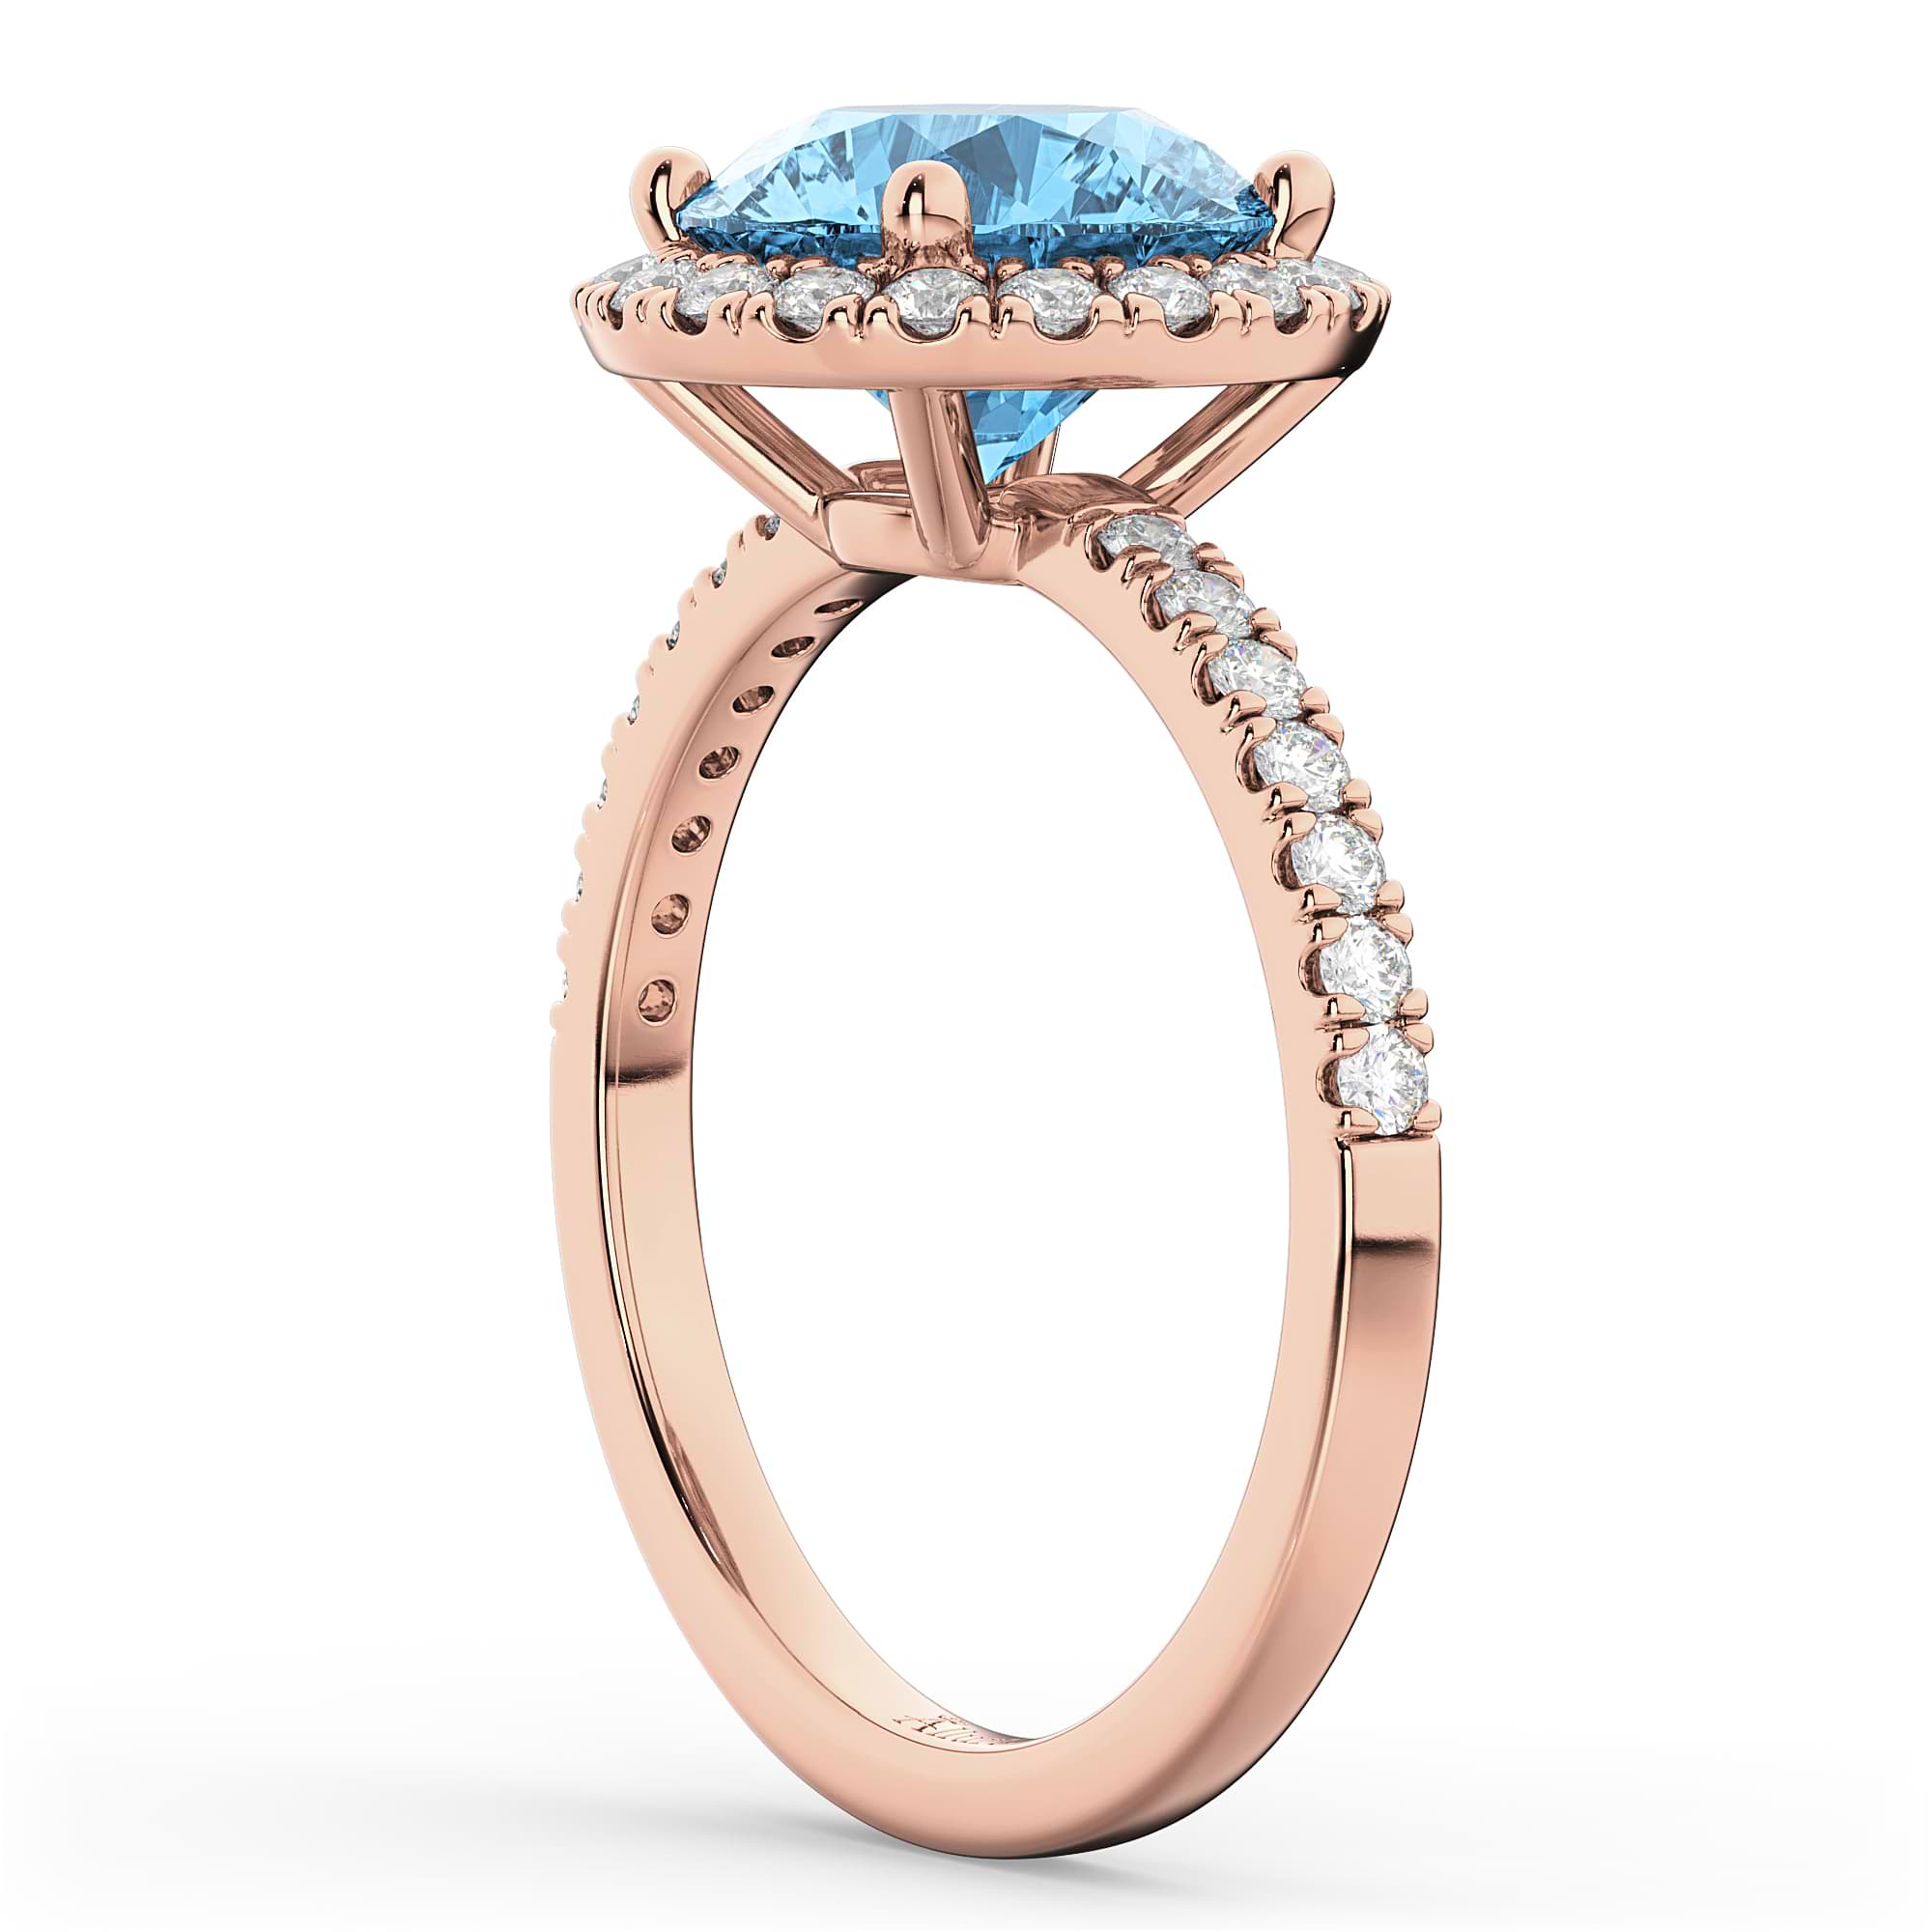 Halo Blue Topaz & Diamond Engagement Ring 14K Rose Gold 3.00ct